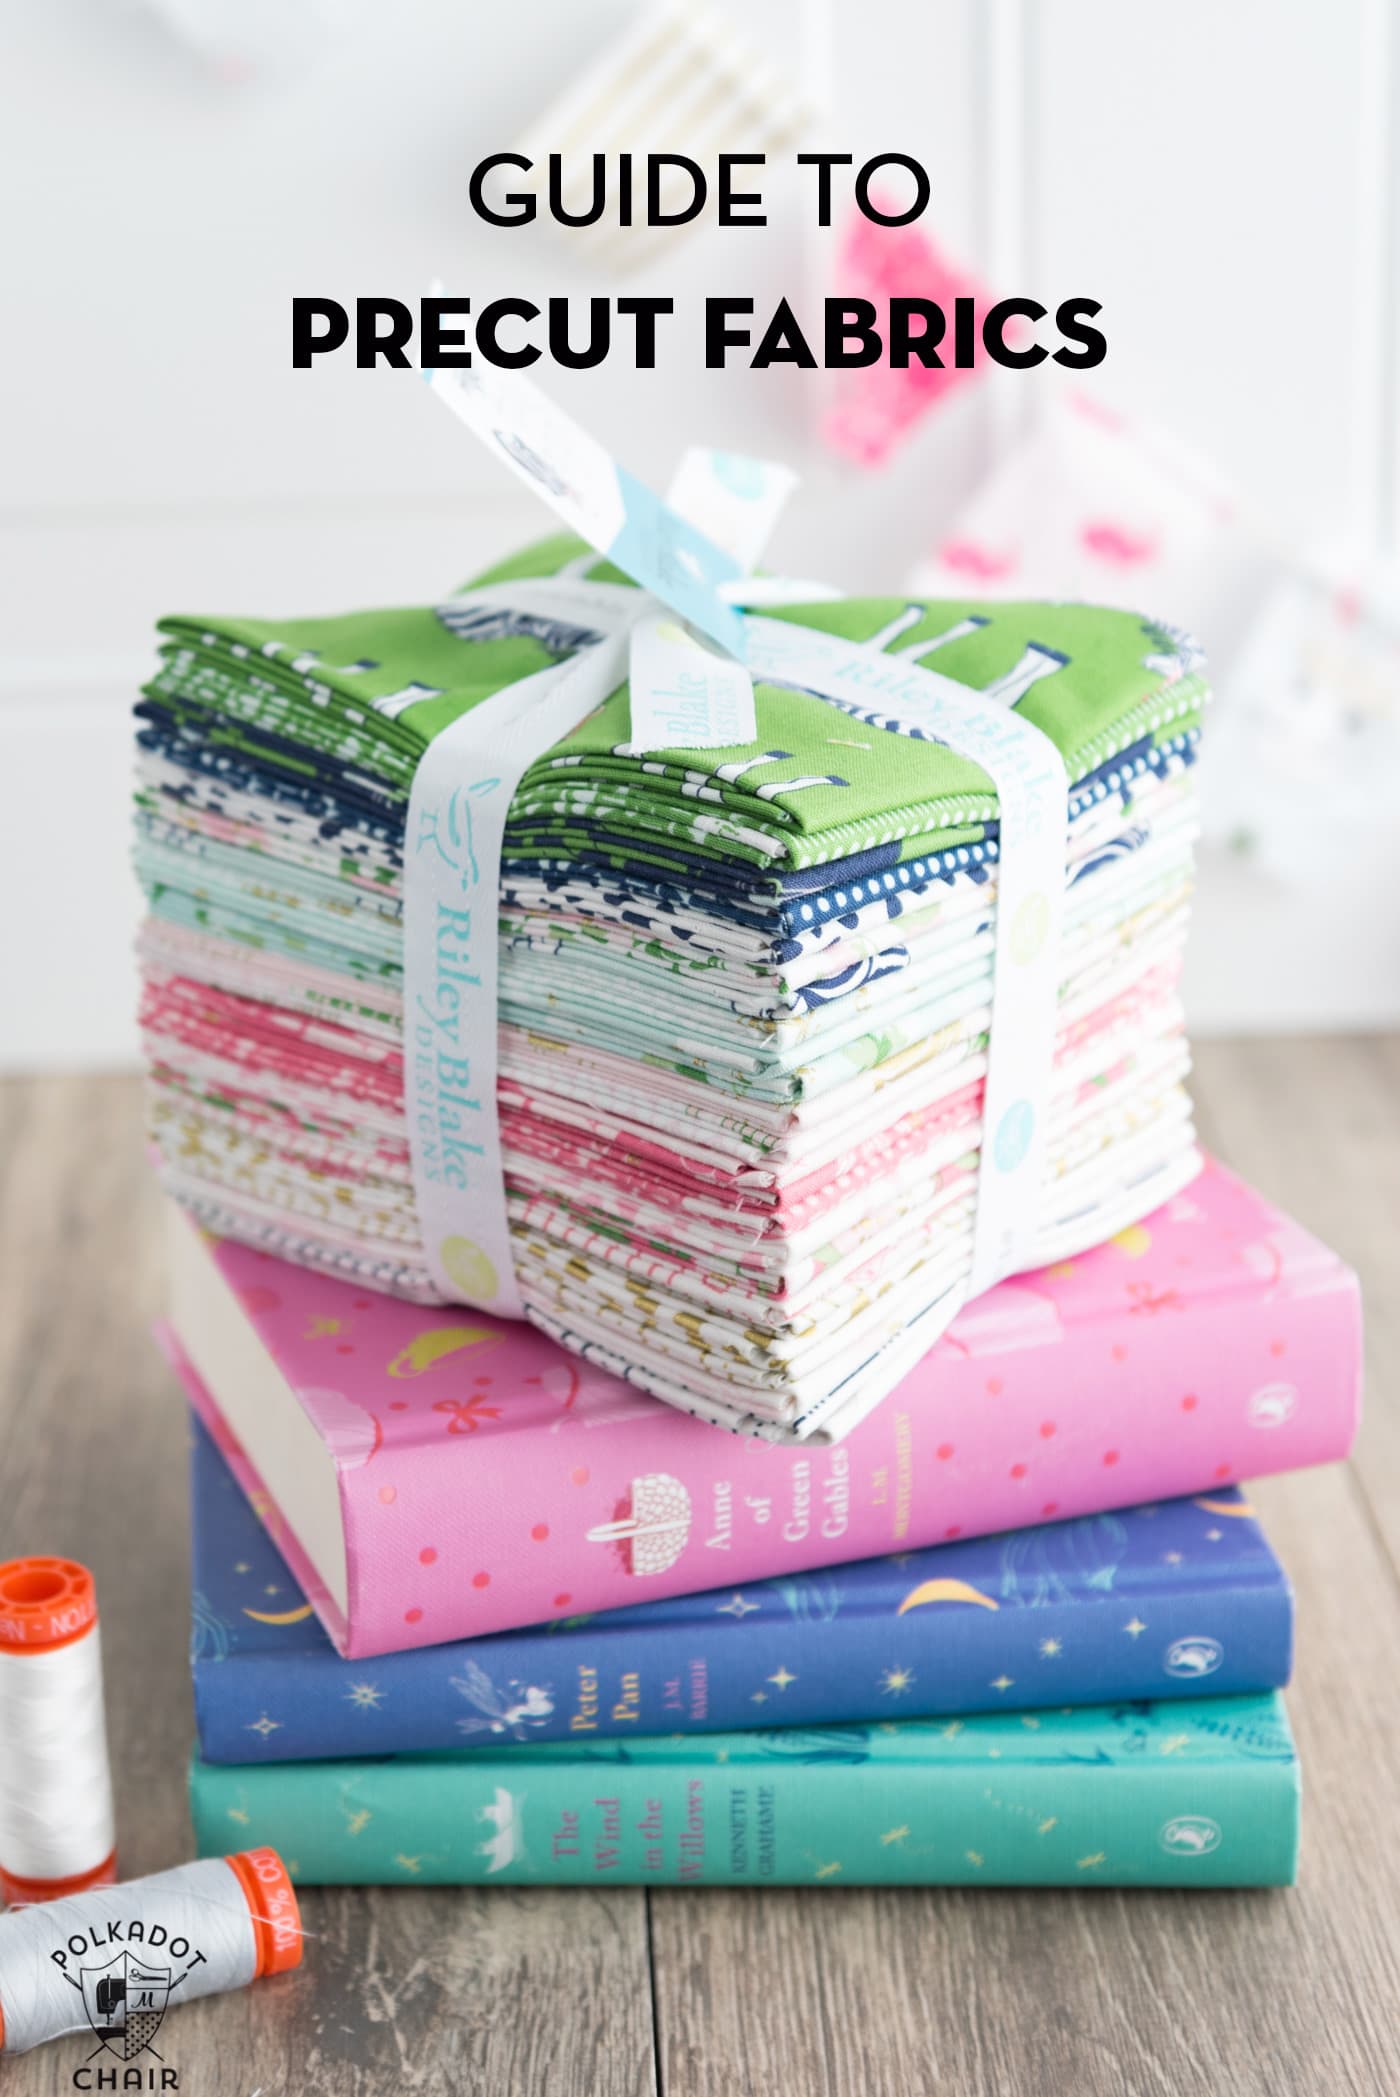 stack of precut fabrics on books